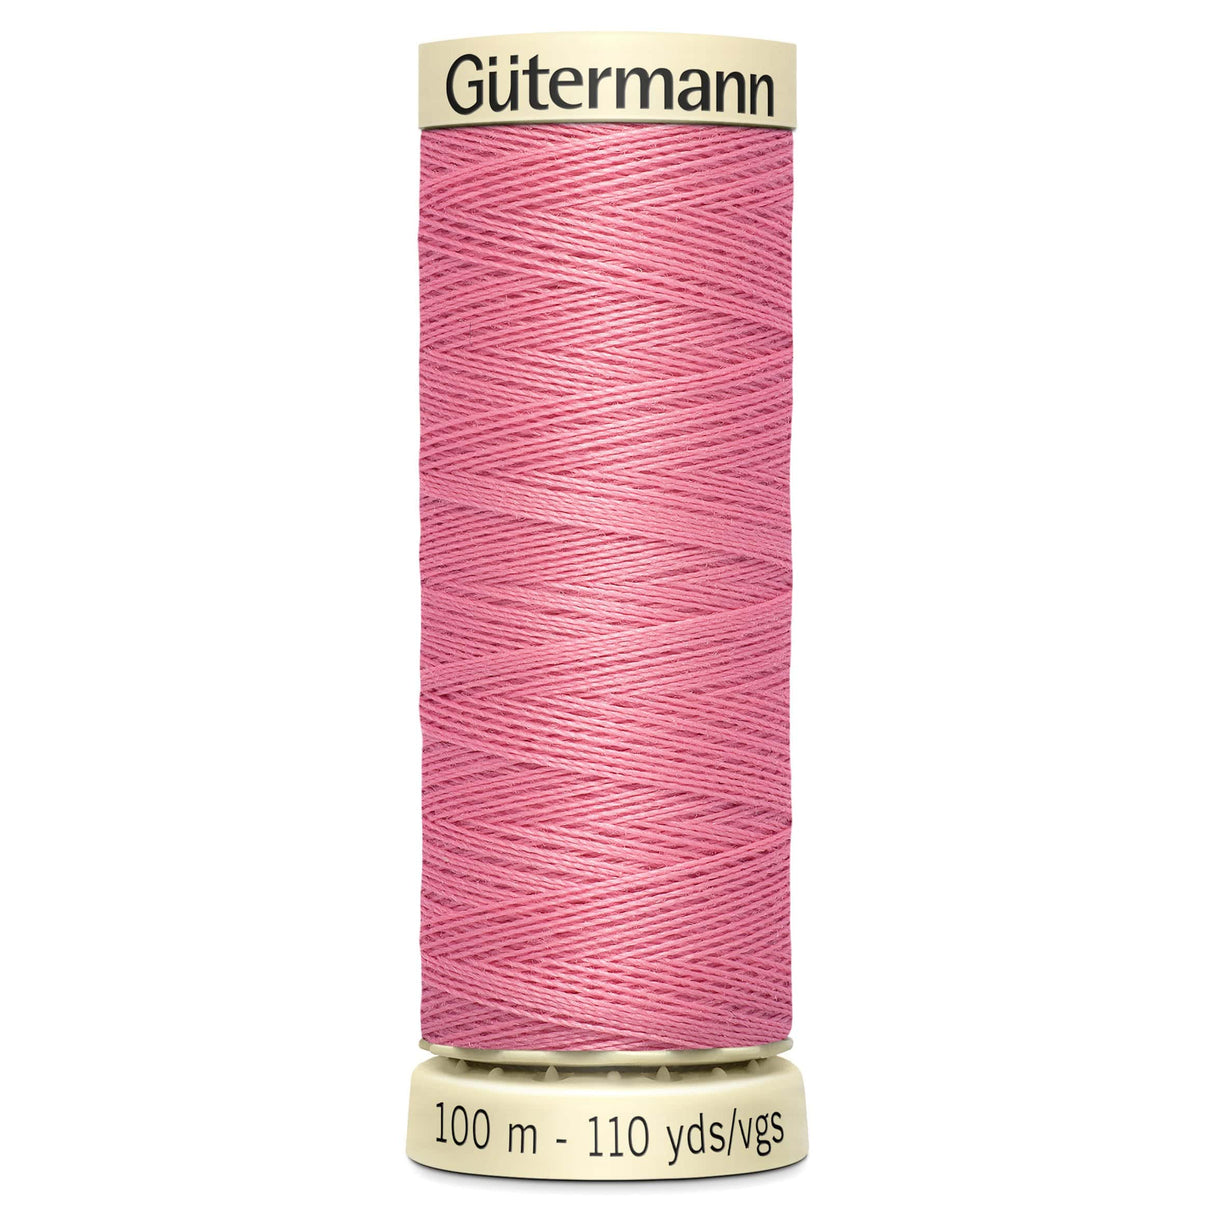 Groves Haberdashery 889 Gutermann Thread Sewing Cotton 100 m Black to Pink